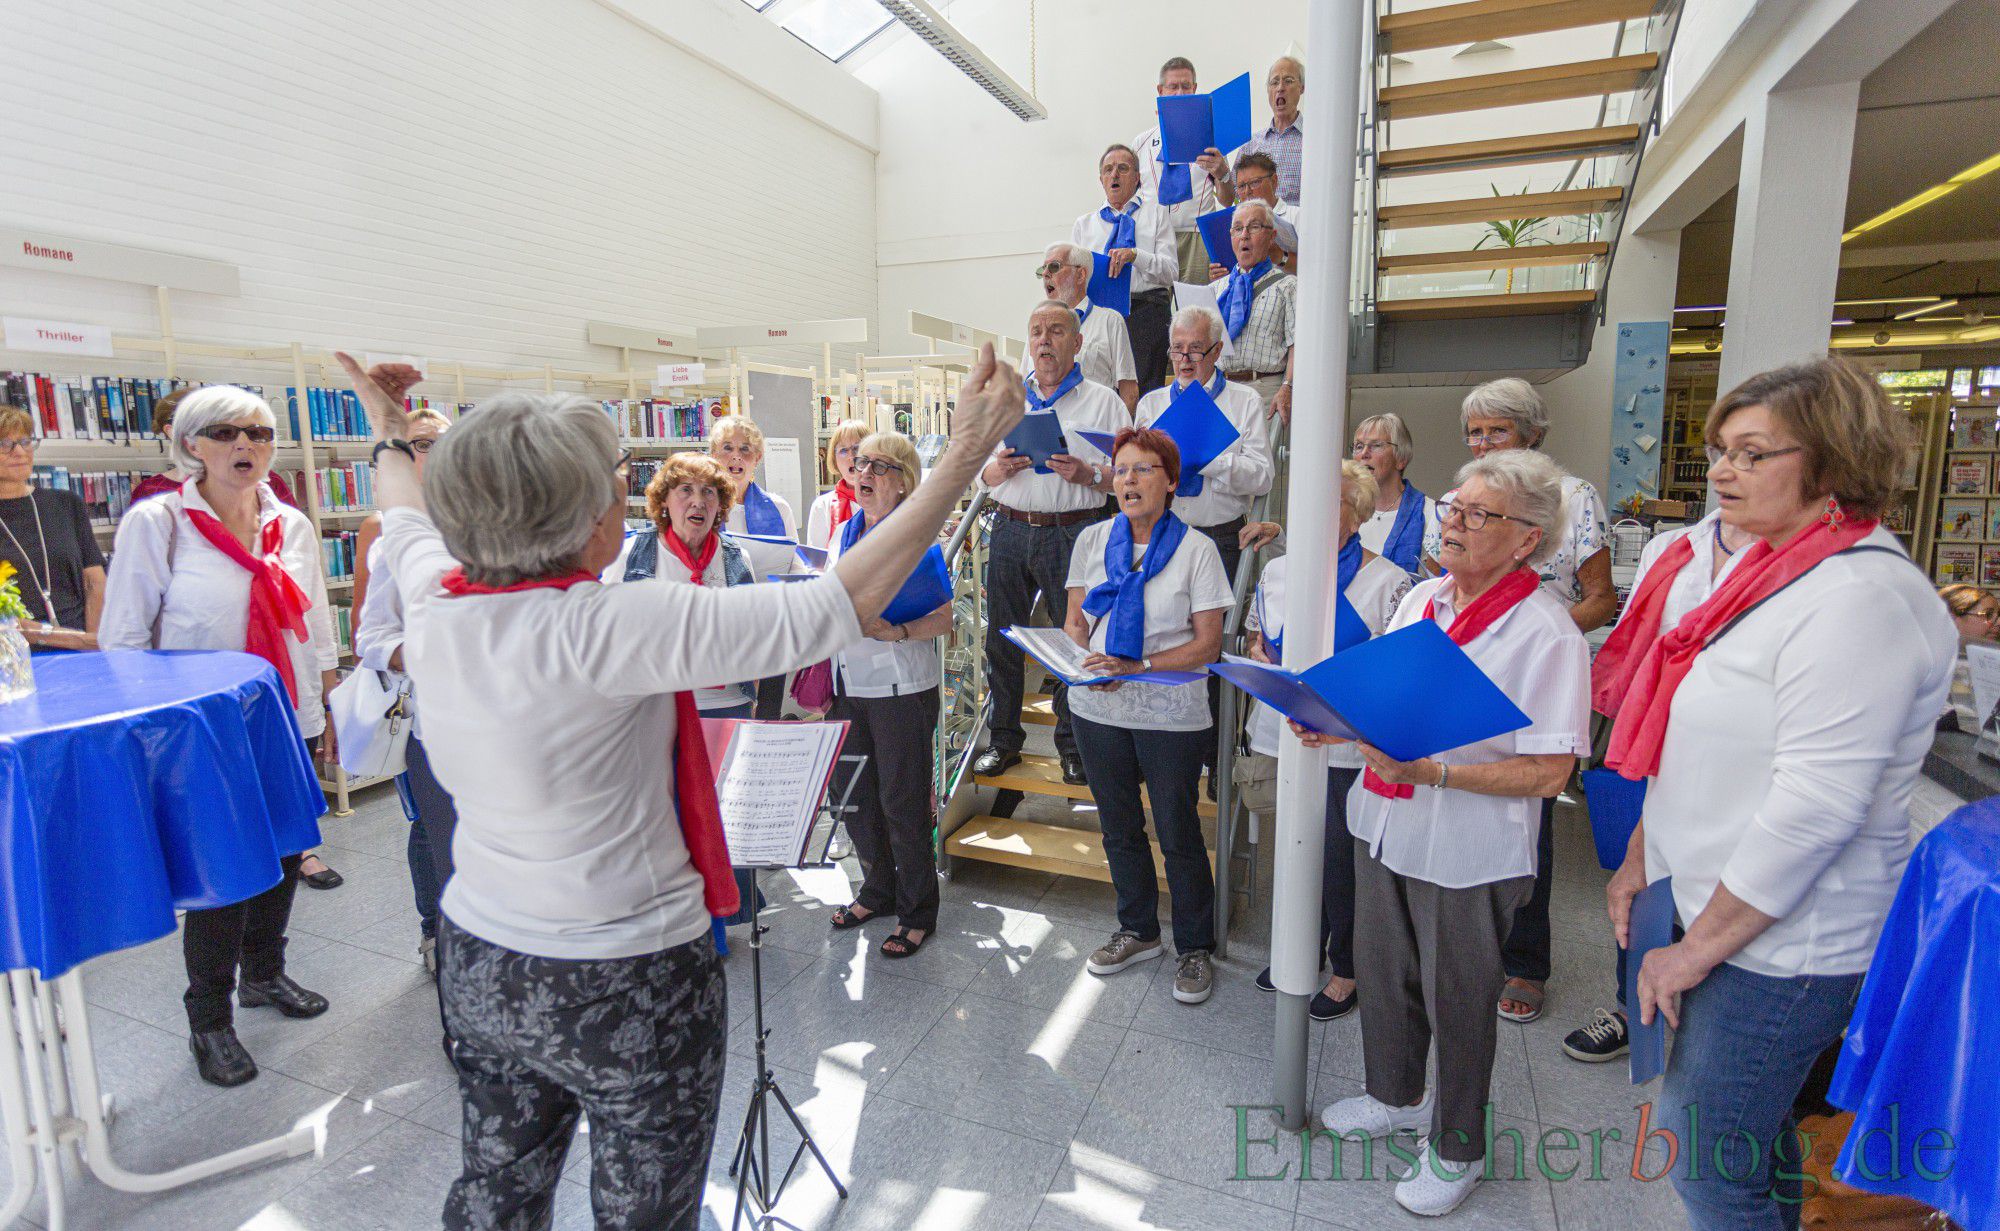 Der Singkreis Chantons umrahmte die Eröffnungsfeier musikalisch. (Foto: P. Gräber - Emscherblog)